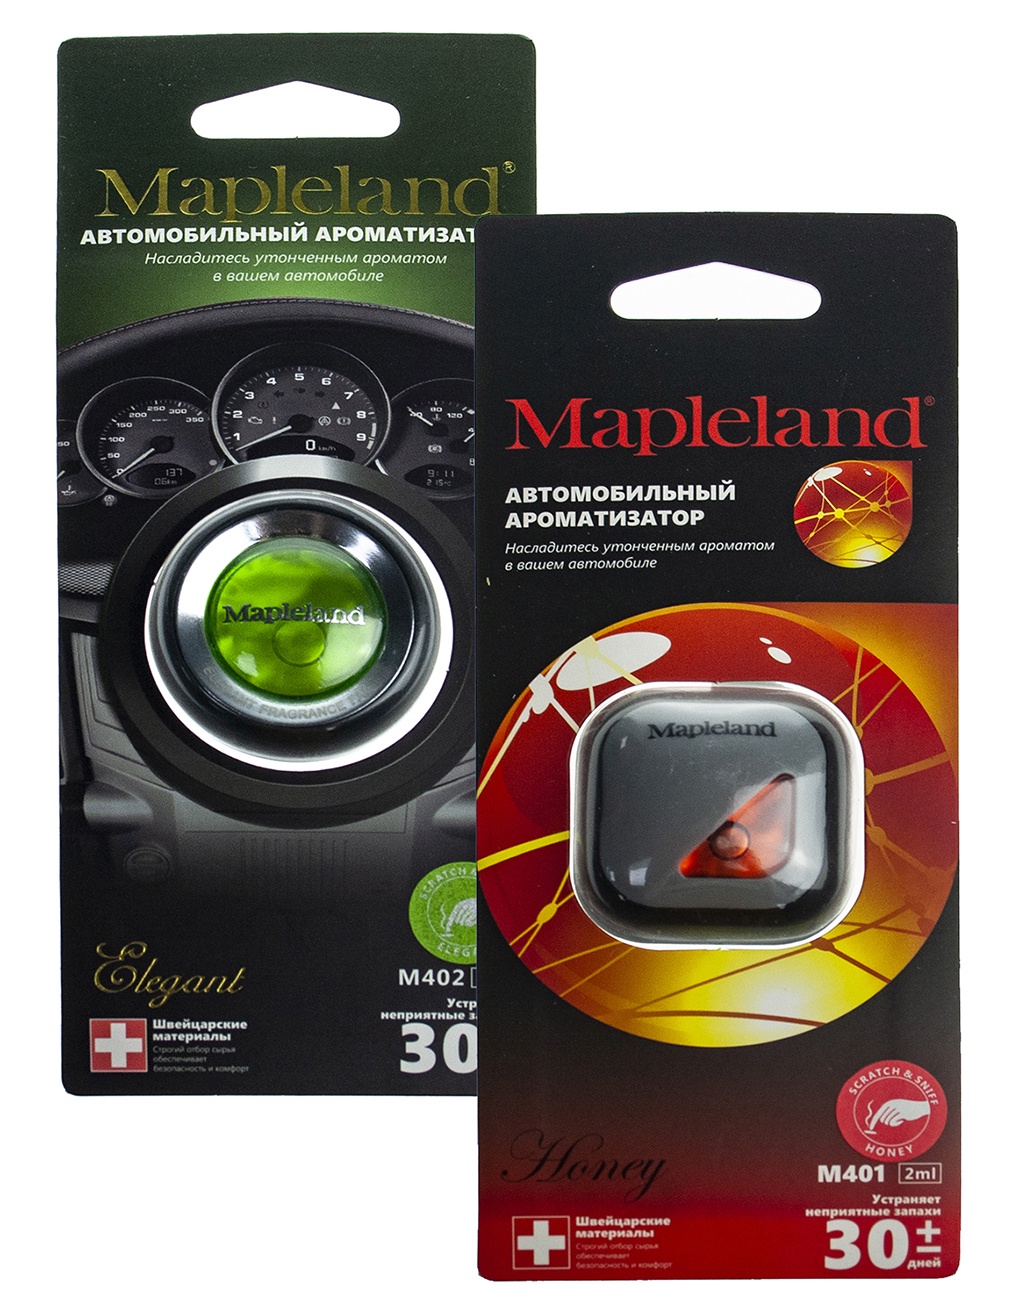 фото Комплект ароматизаторов для автомобиля M402 Elegant и M401 Honey PA0494, 2 шт Mapleland